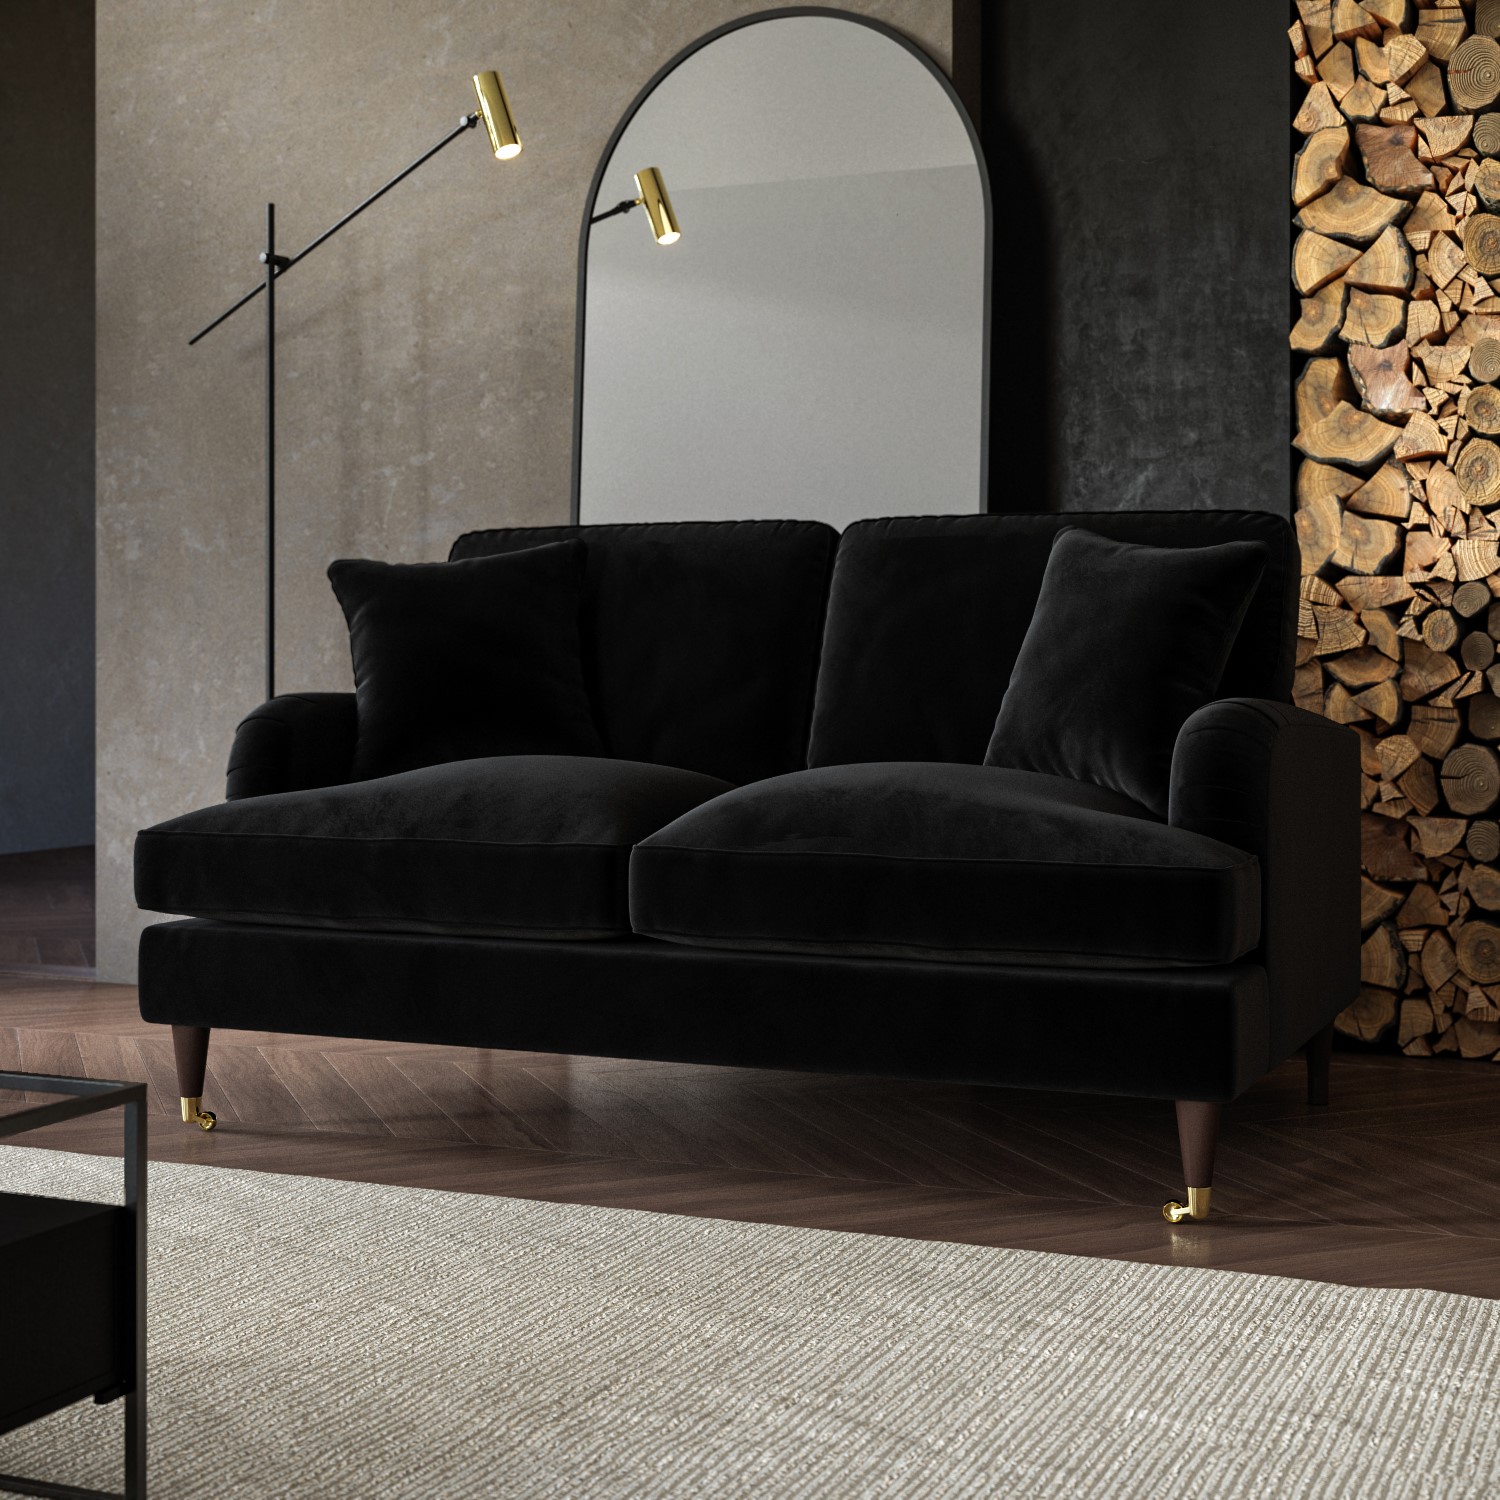 Read more about Black velvet 2 seater sofa payton